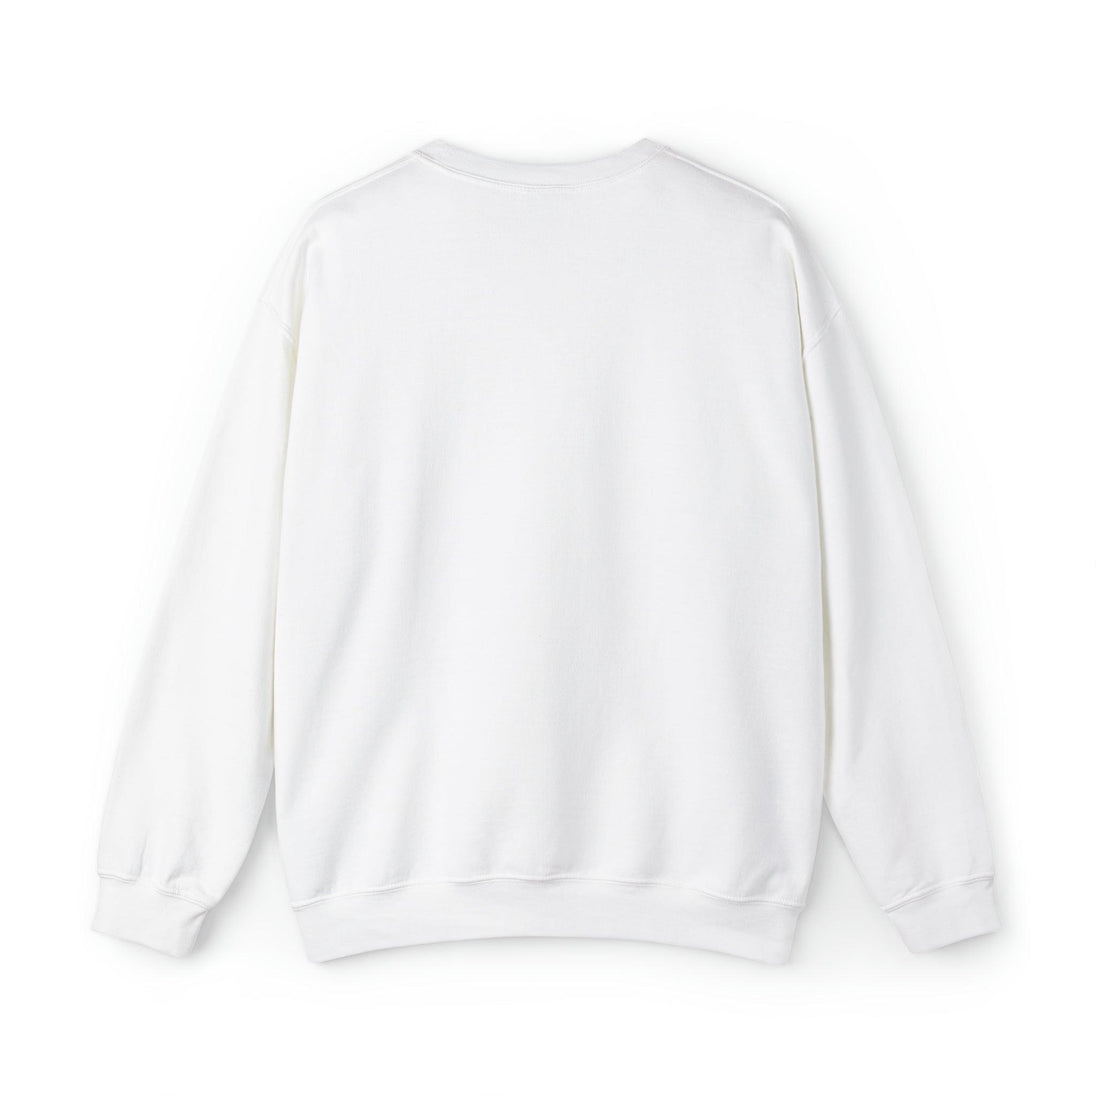 Life's Good Unisex Heavy Blend™ Crewneck Sweatshirt - PremiumBrandGoods